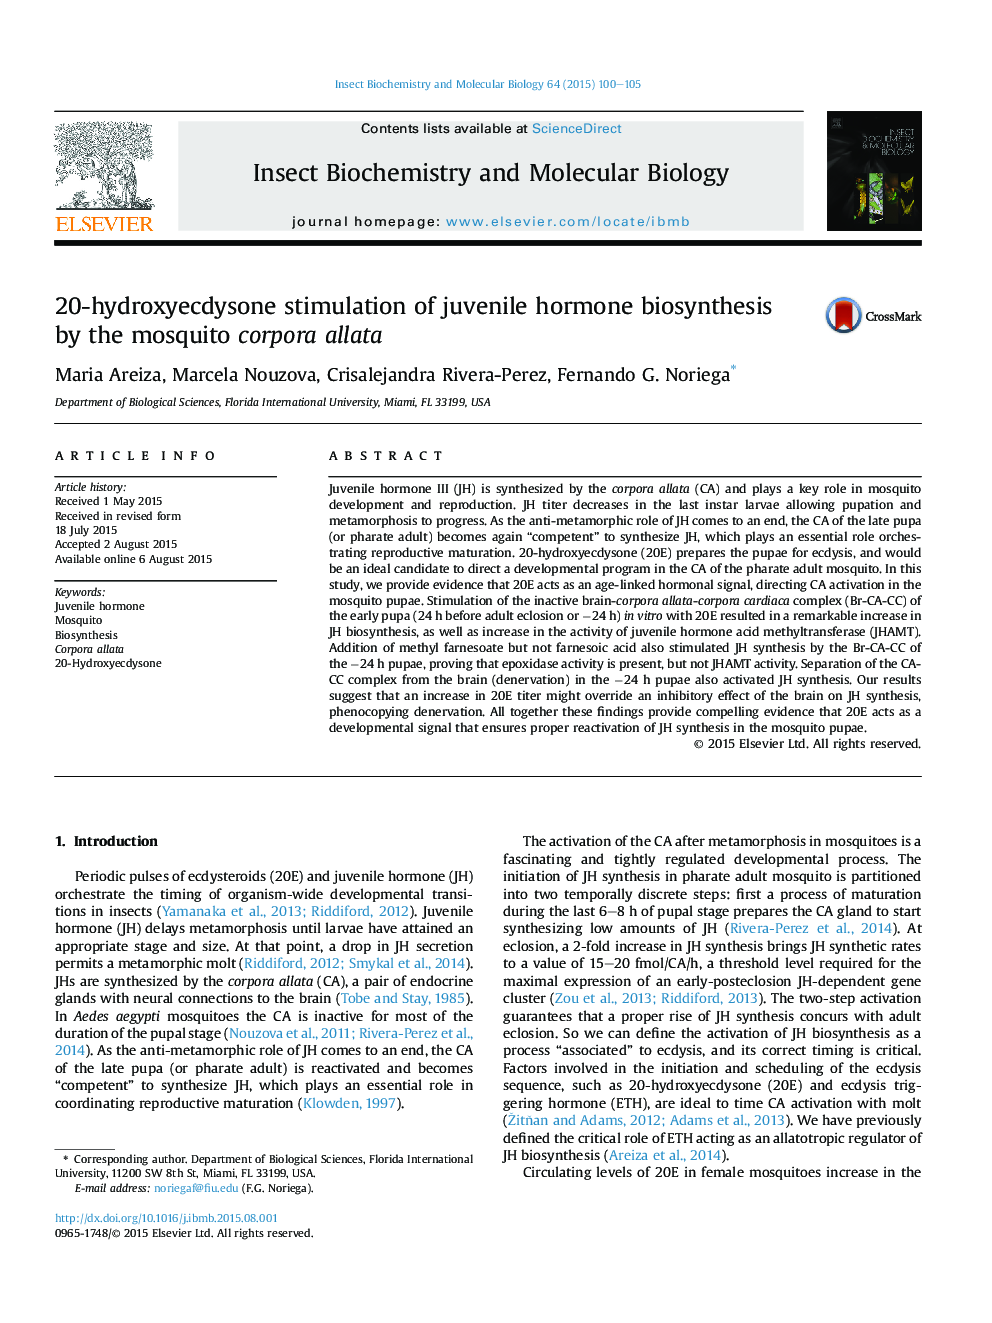 20-hydroxyecdysone stimulation of juvenile hormone biosynthesis byÂ the mosquito corpora allata